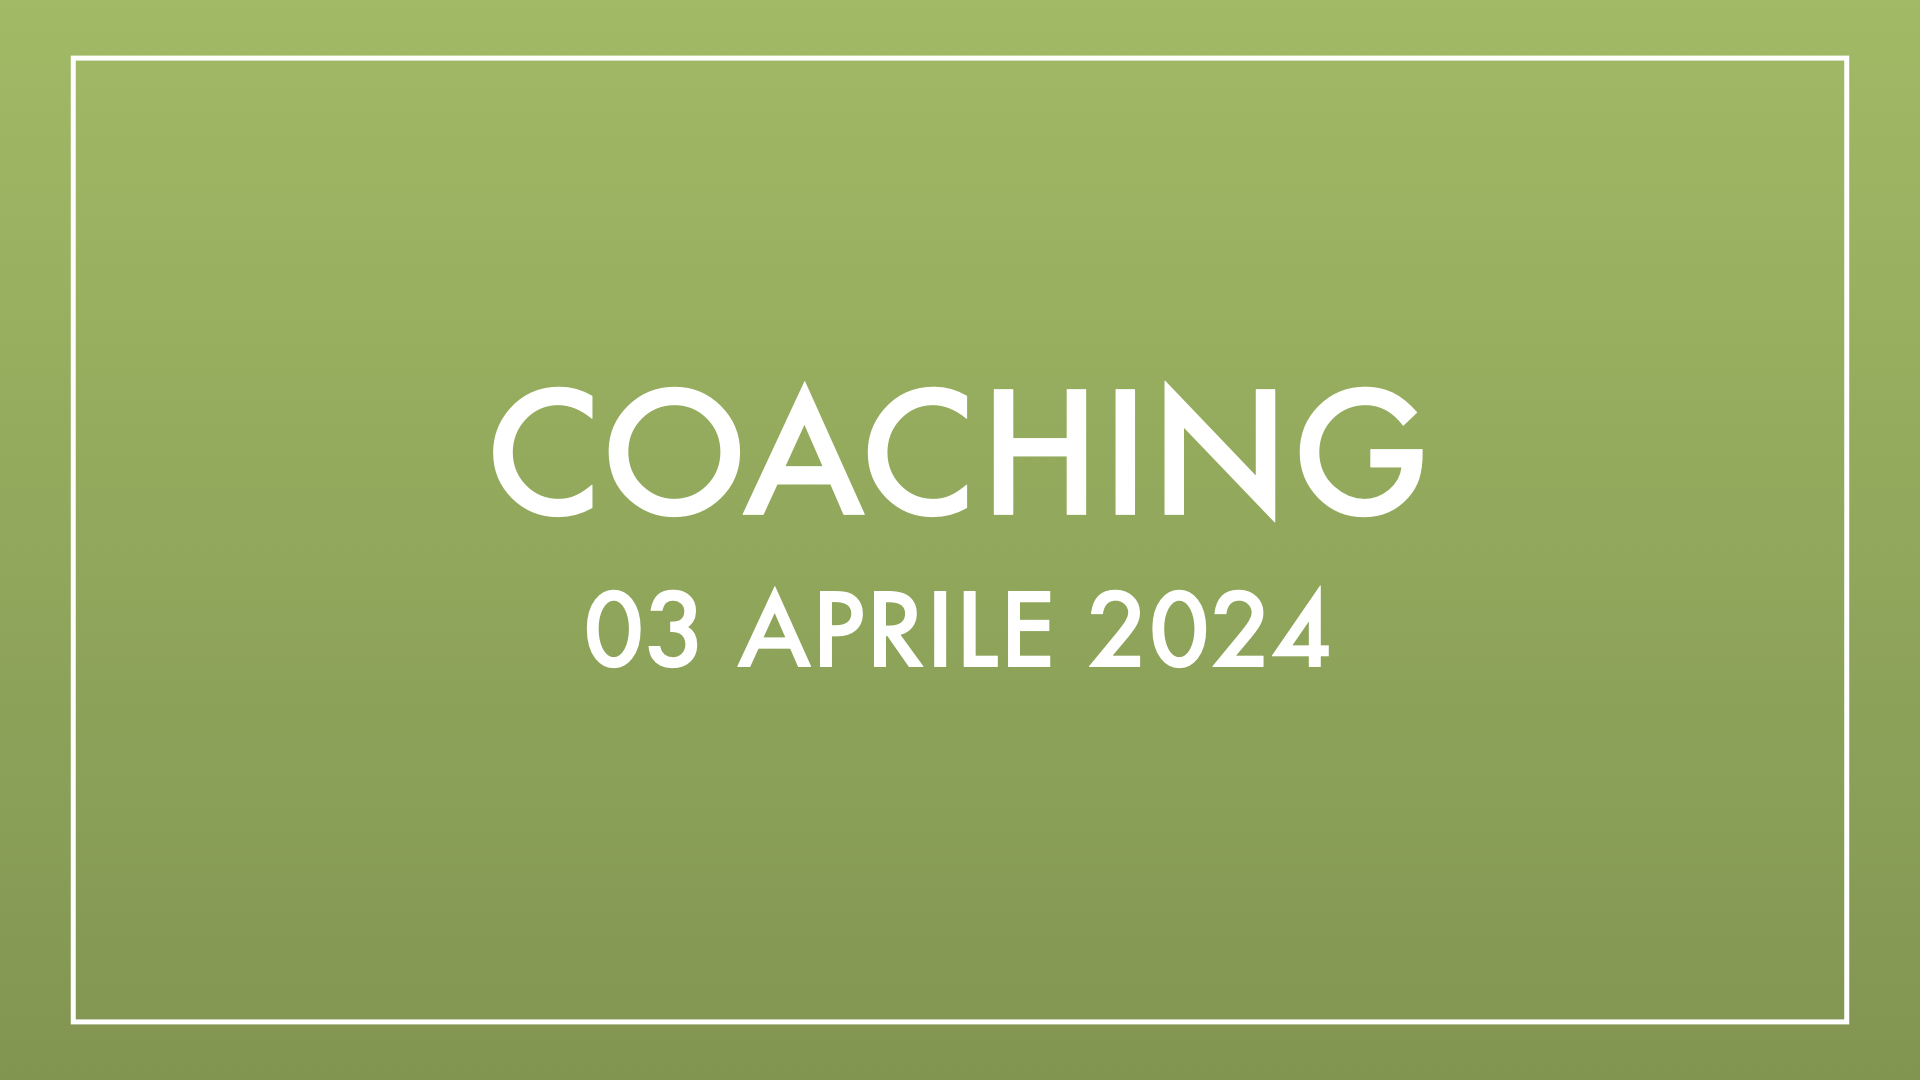 Coaching 03 aprile 2024